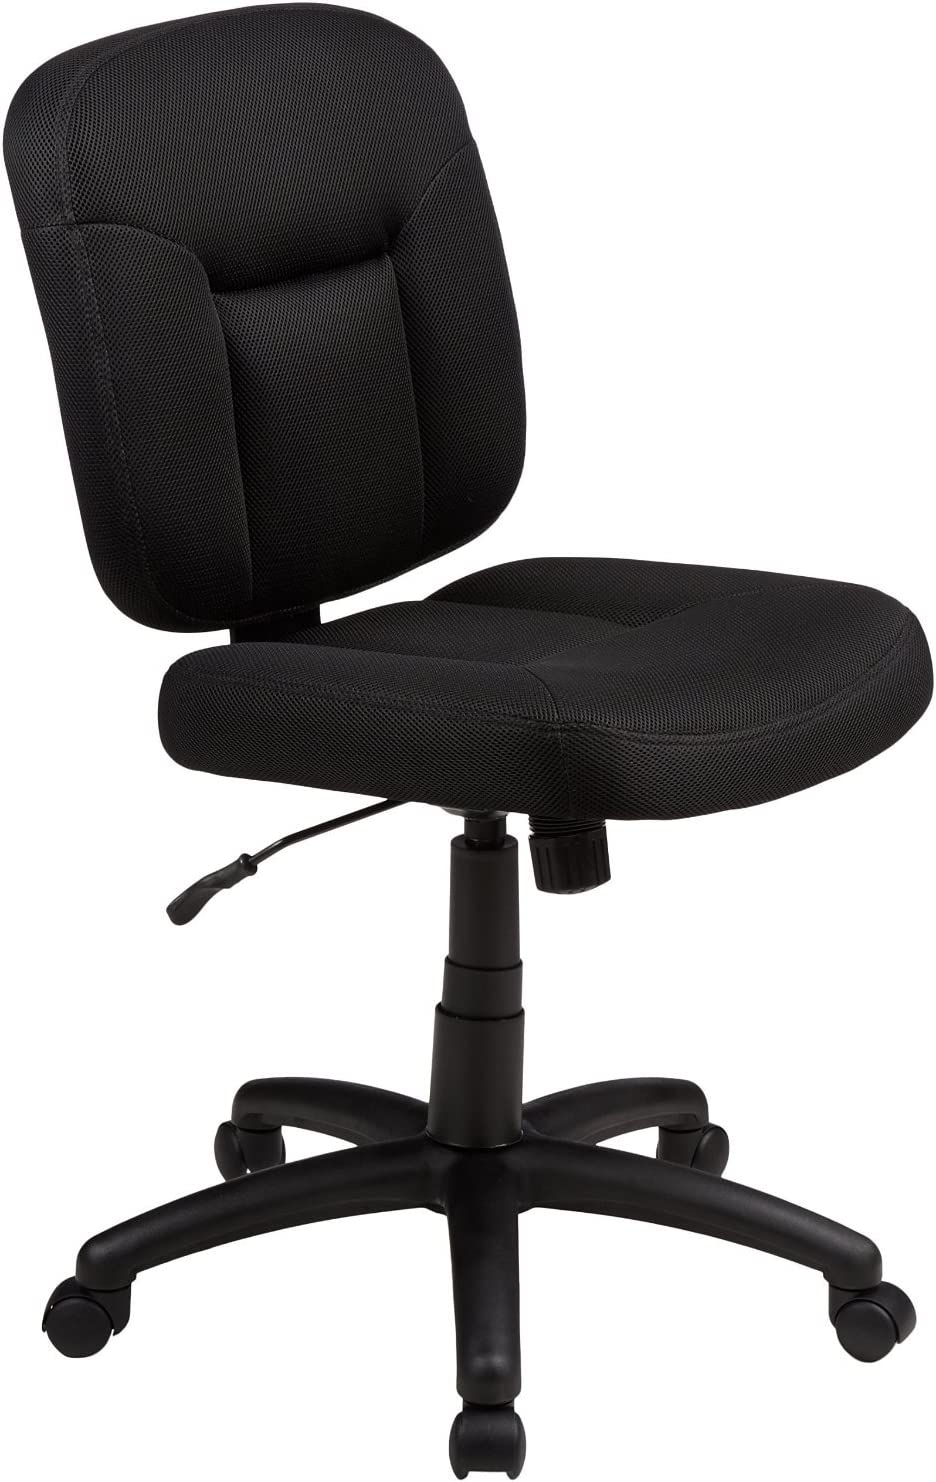 AmazonBasics Wheeled BIFMA Certified Office Chair